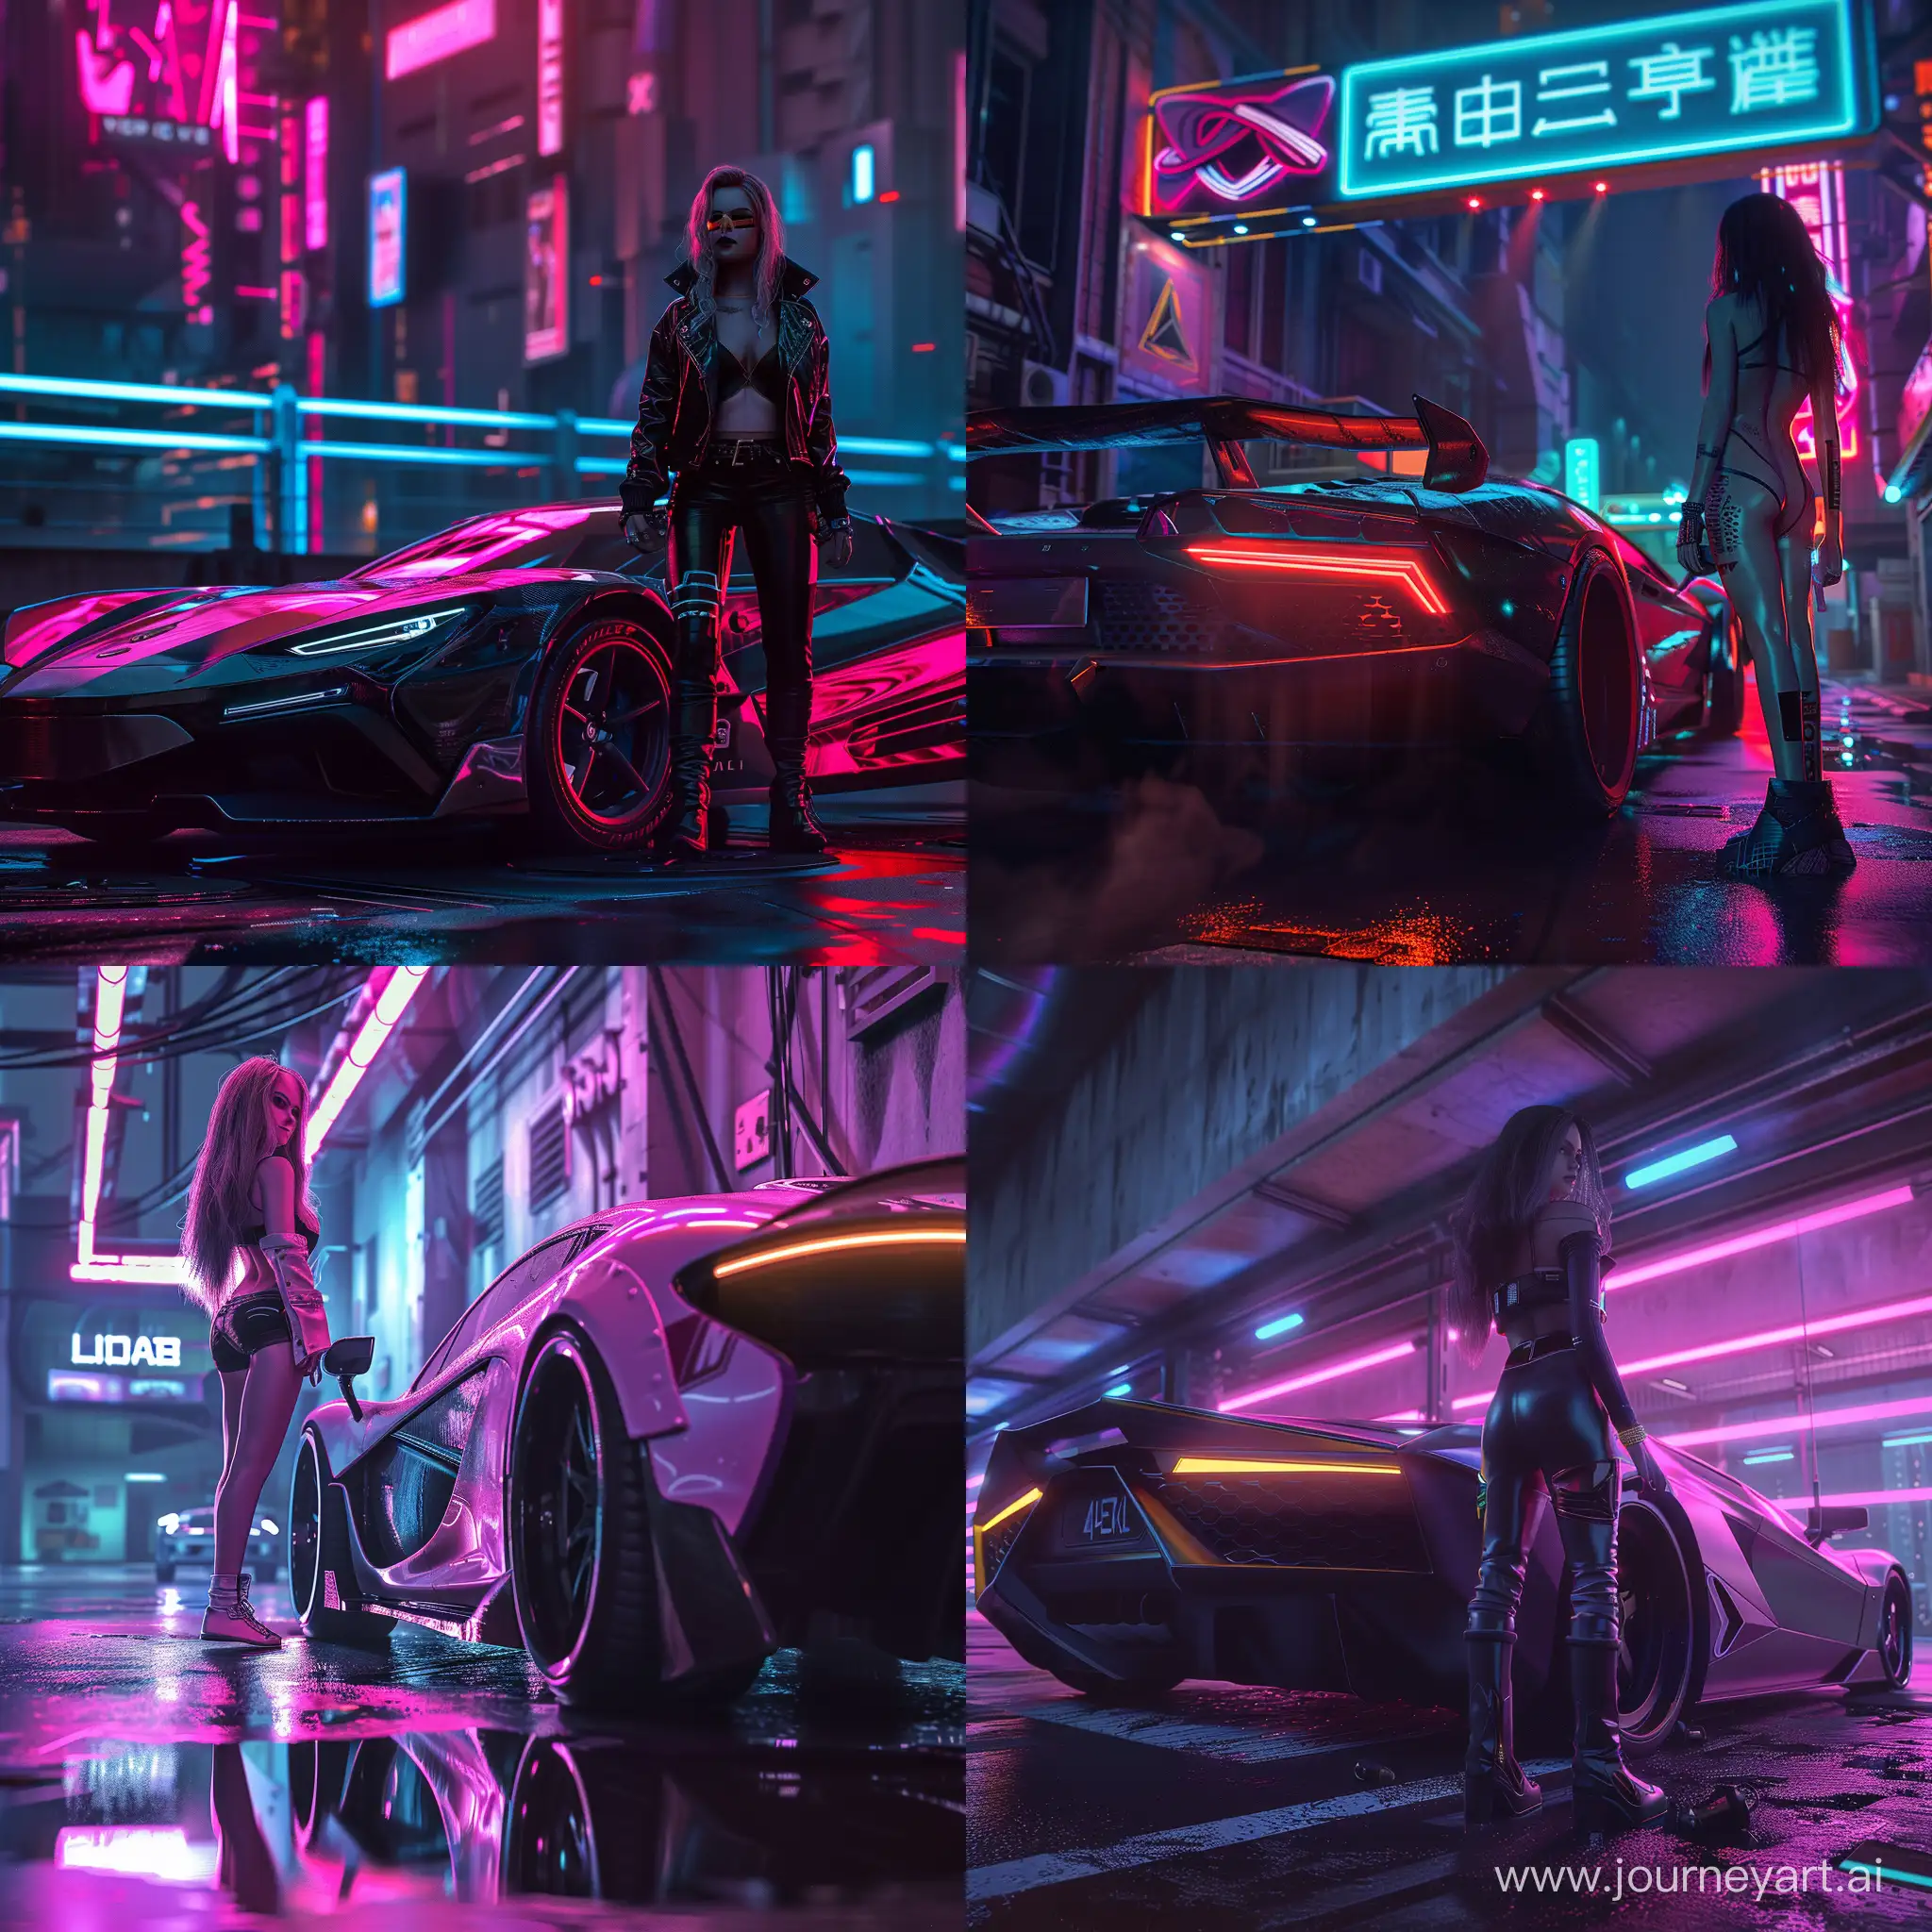 Futuristic-Cyberpunk-Scene-Stylish-Girl-Posing-Beside-Super-Car-with-Vibrant-Neon-Illumination-in-Stunning-4K-Detail